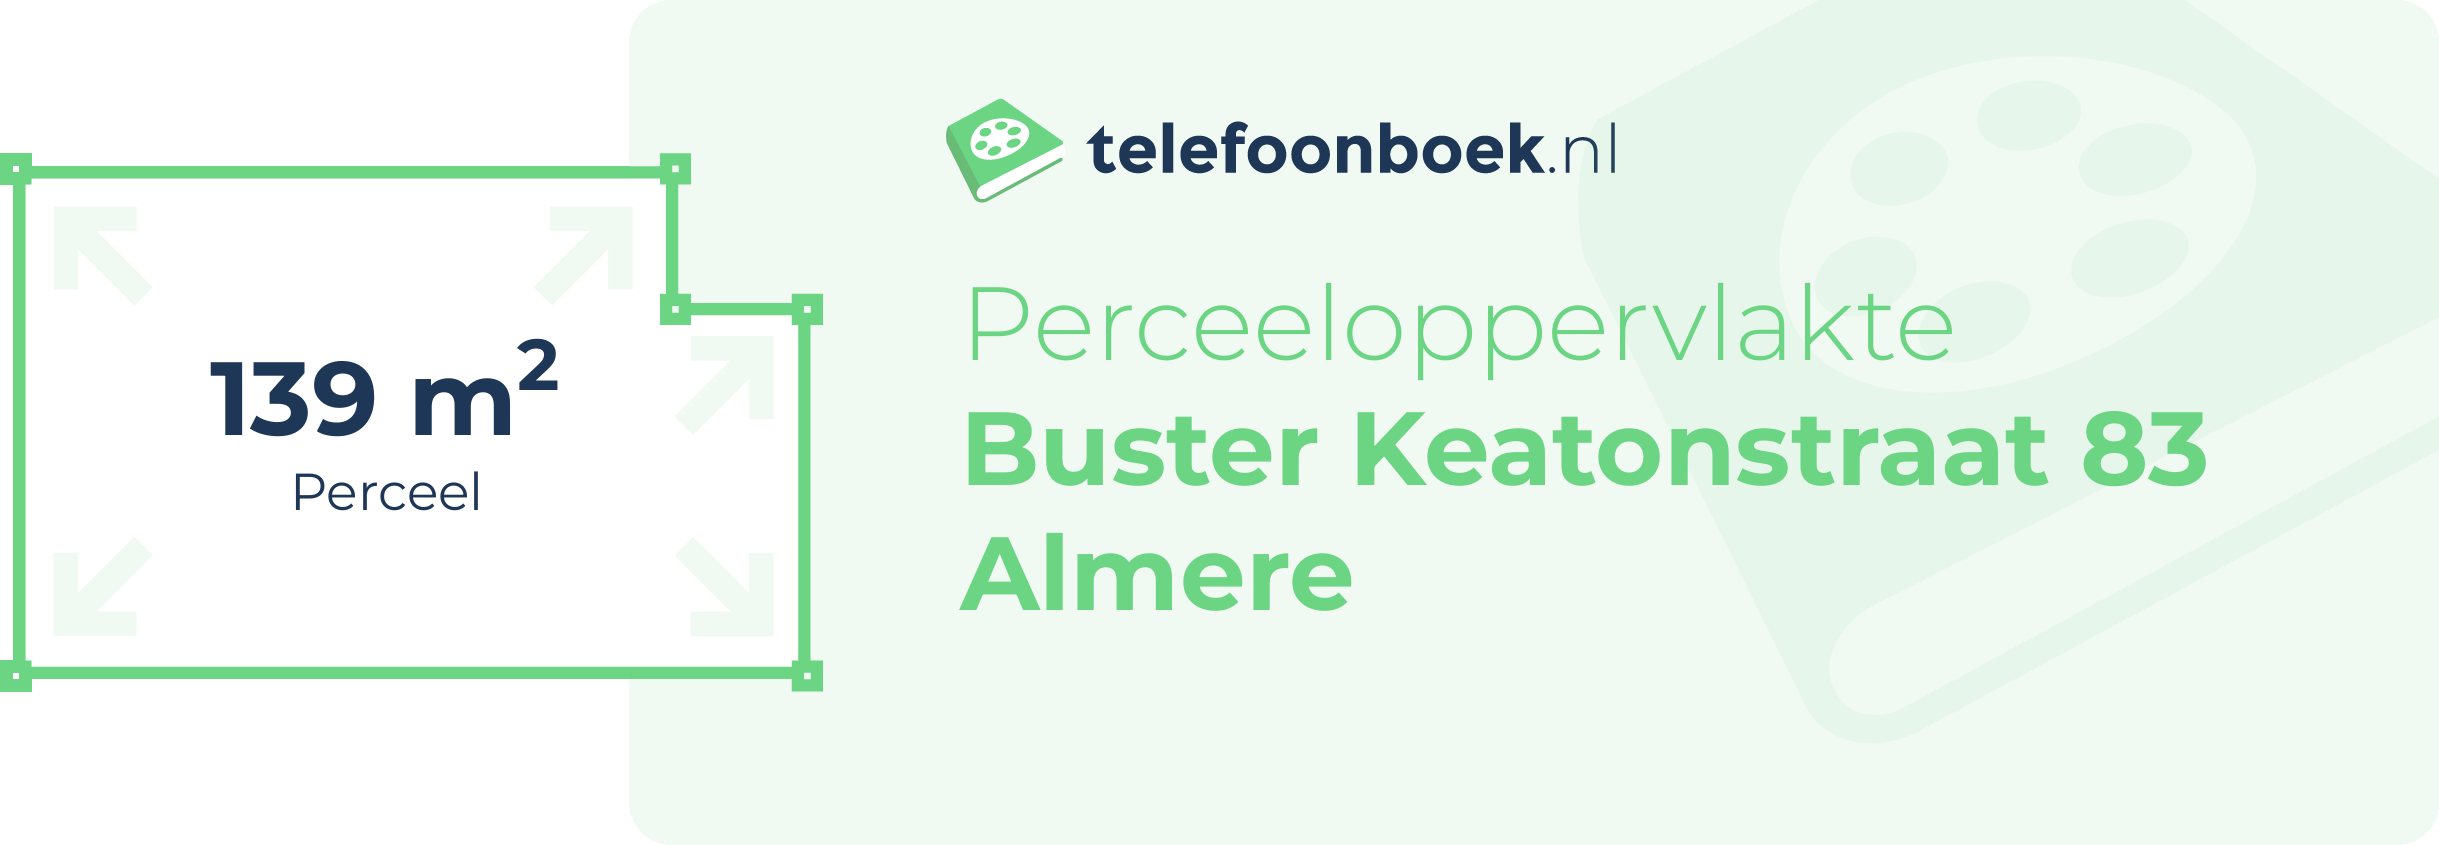 Perceeloppervlakte Buster Keatonstraat 83 Almere